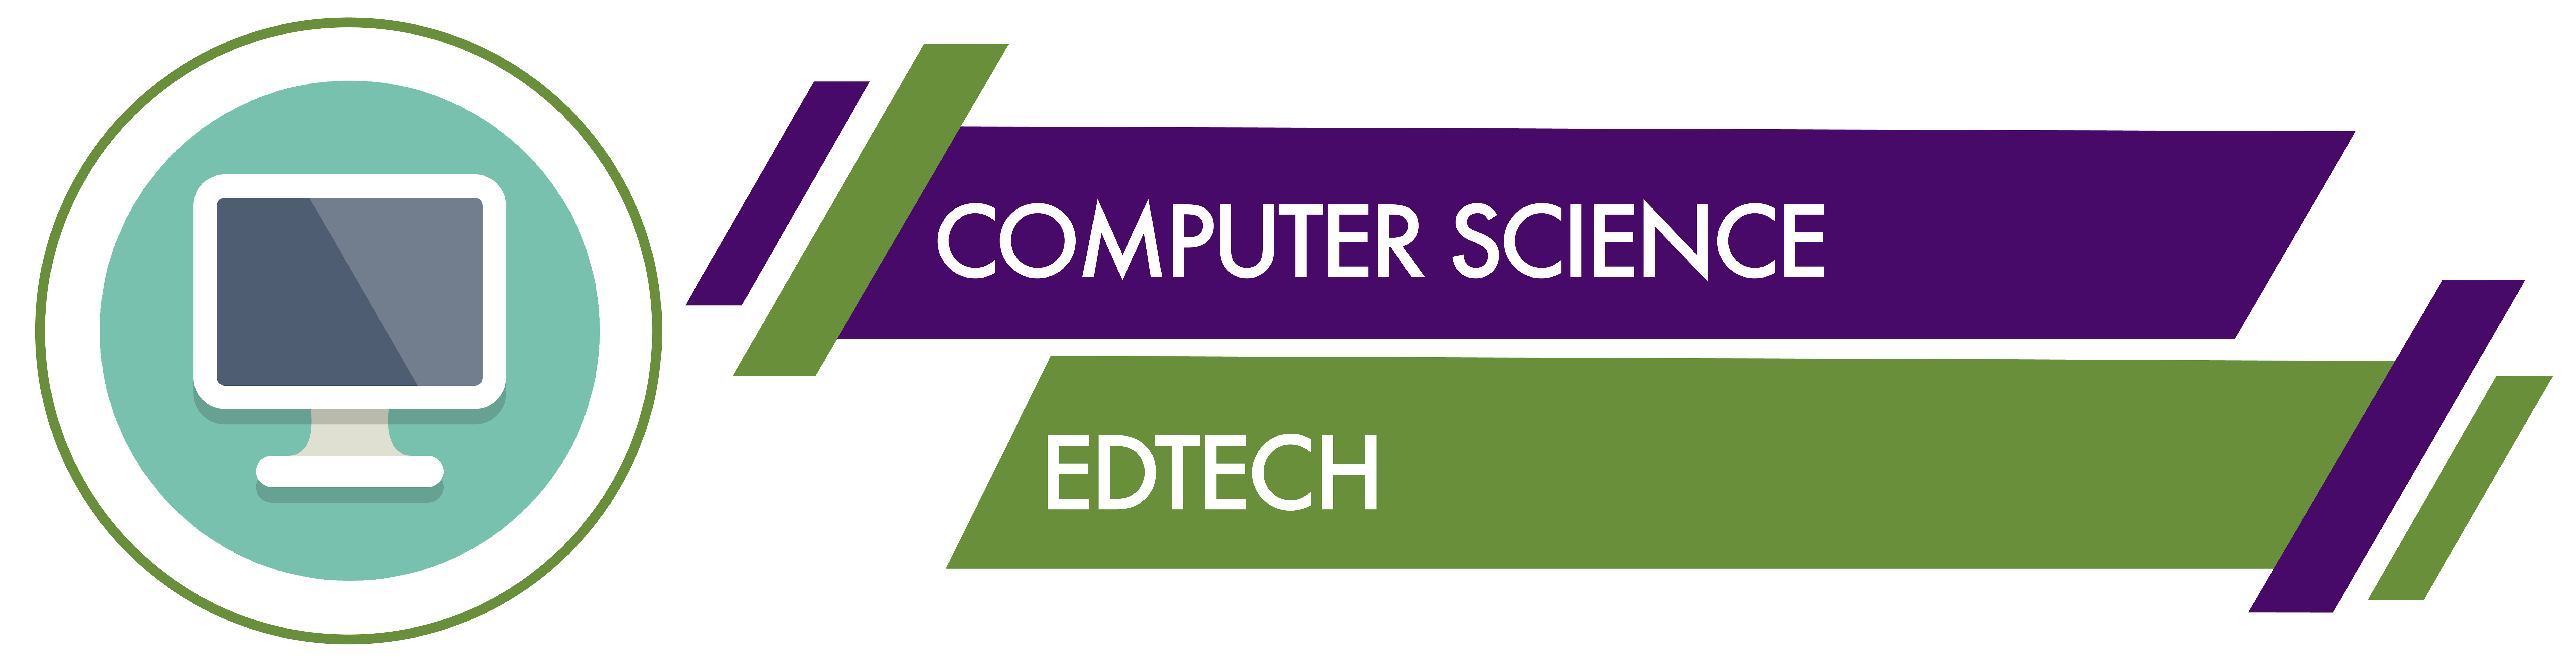 Computer Science/EdTech Banner